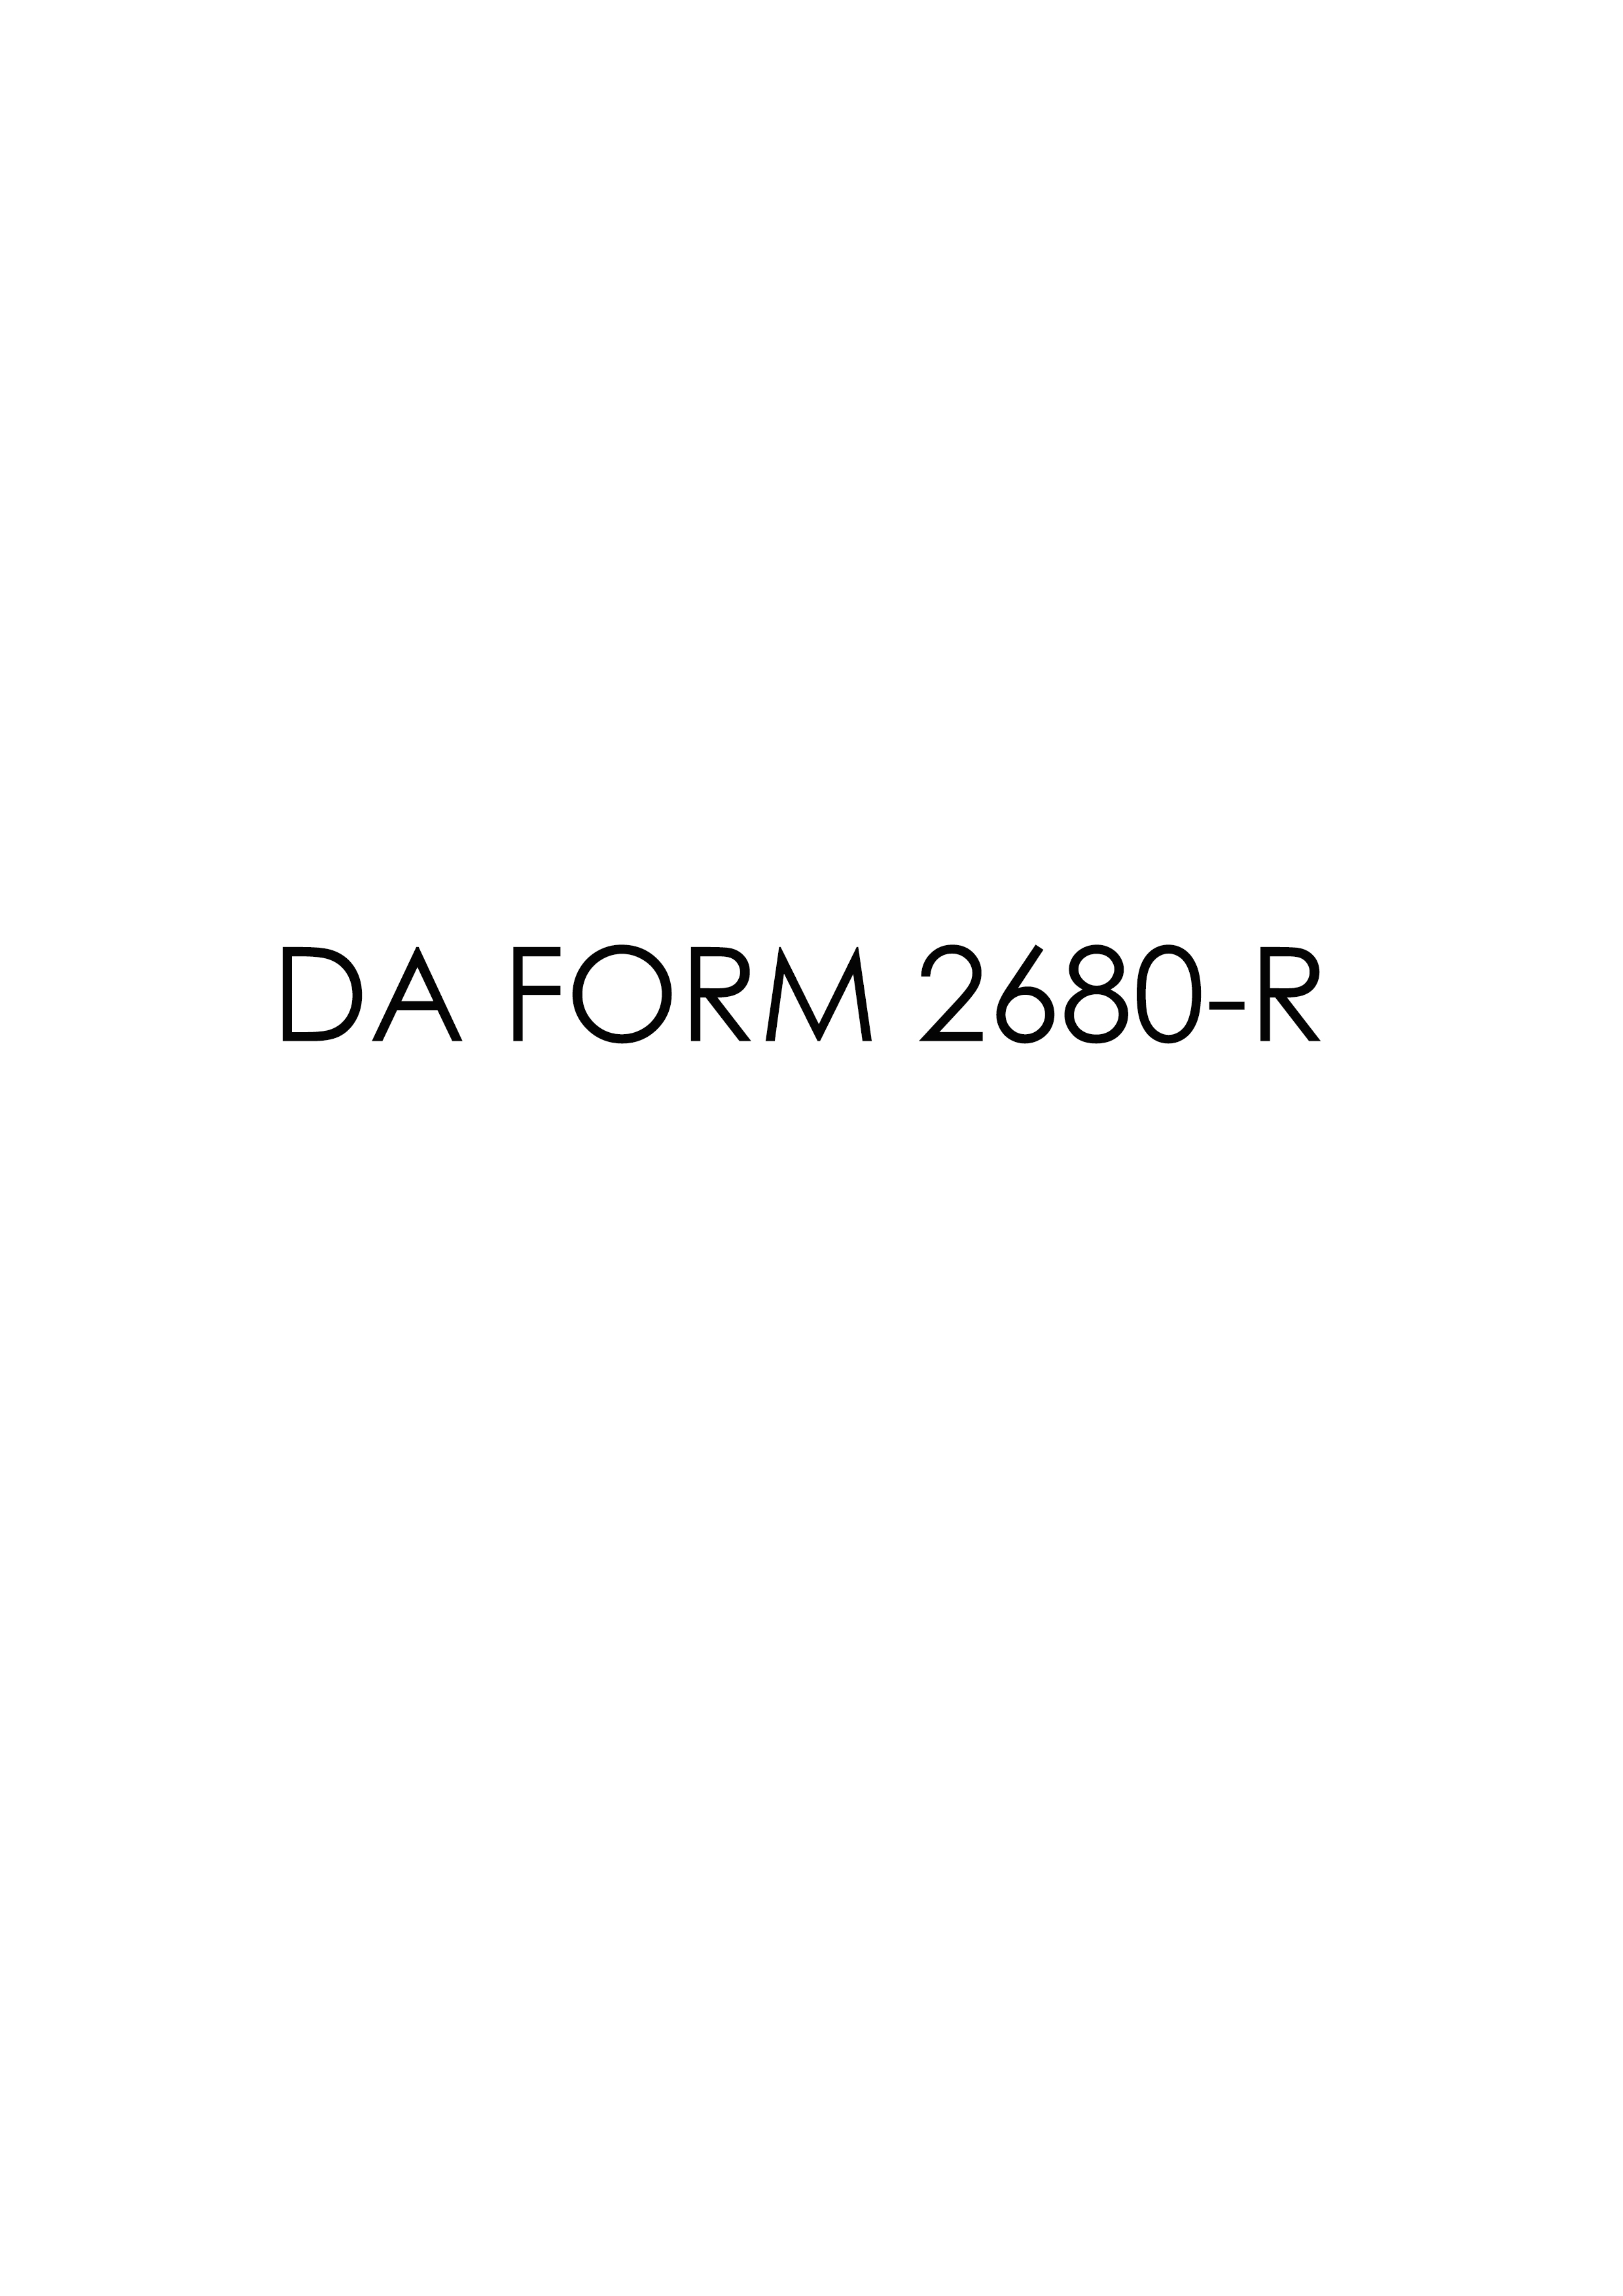 da Form 2680-R fillable